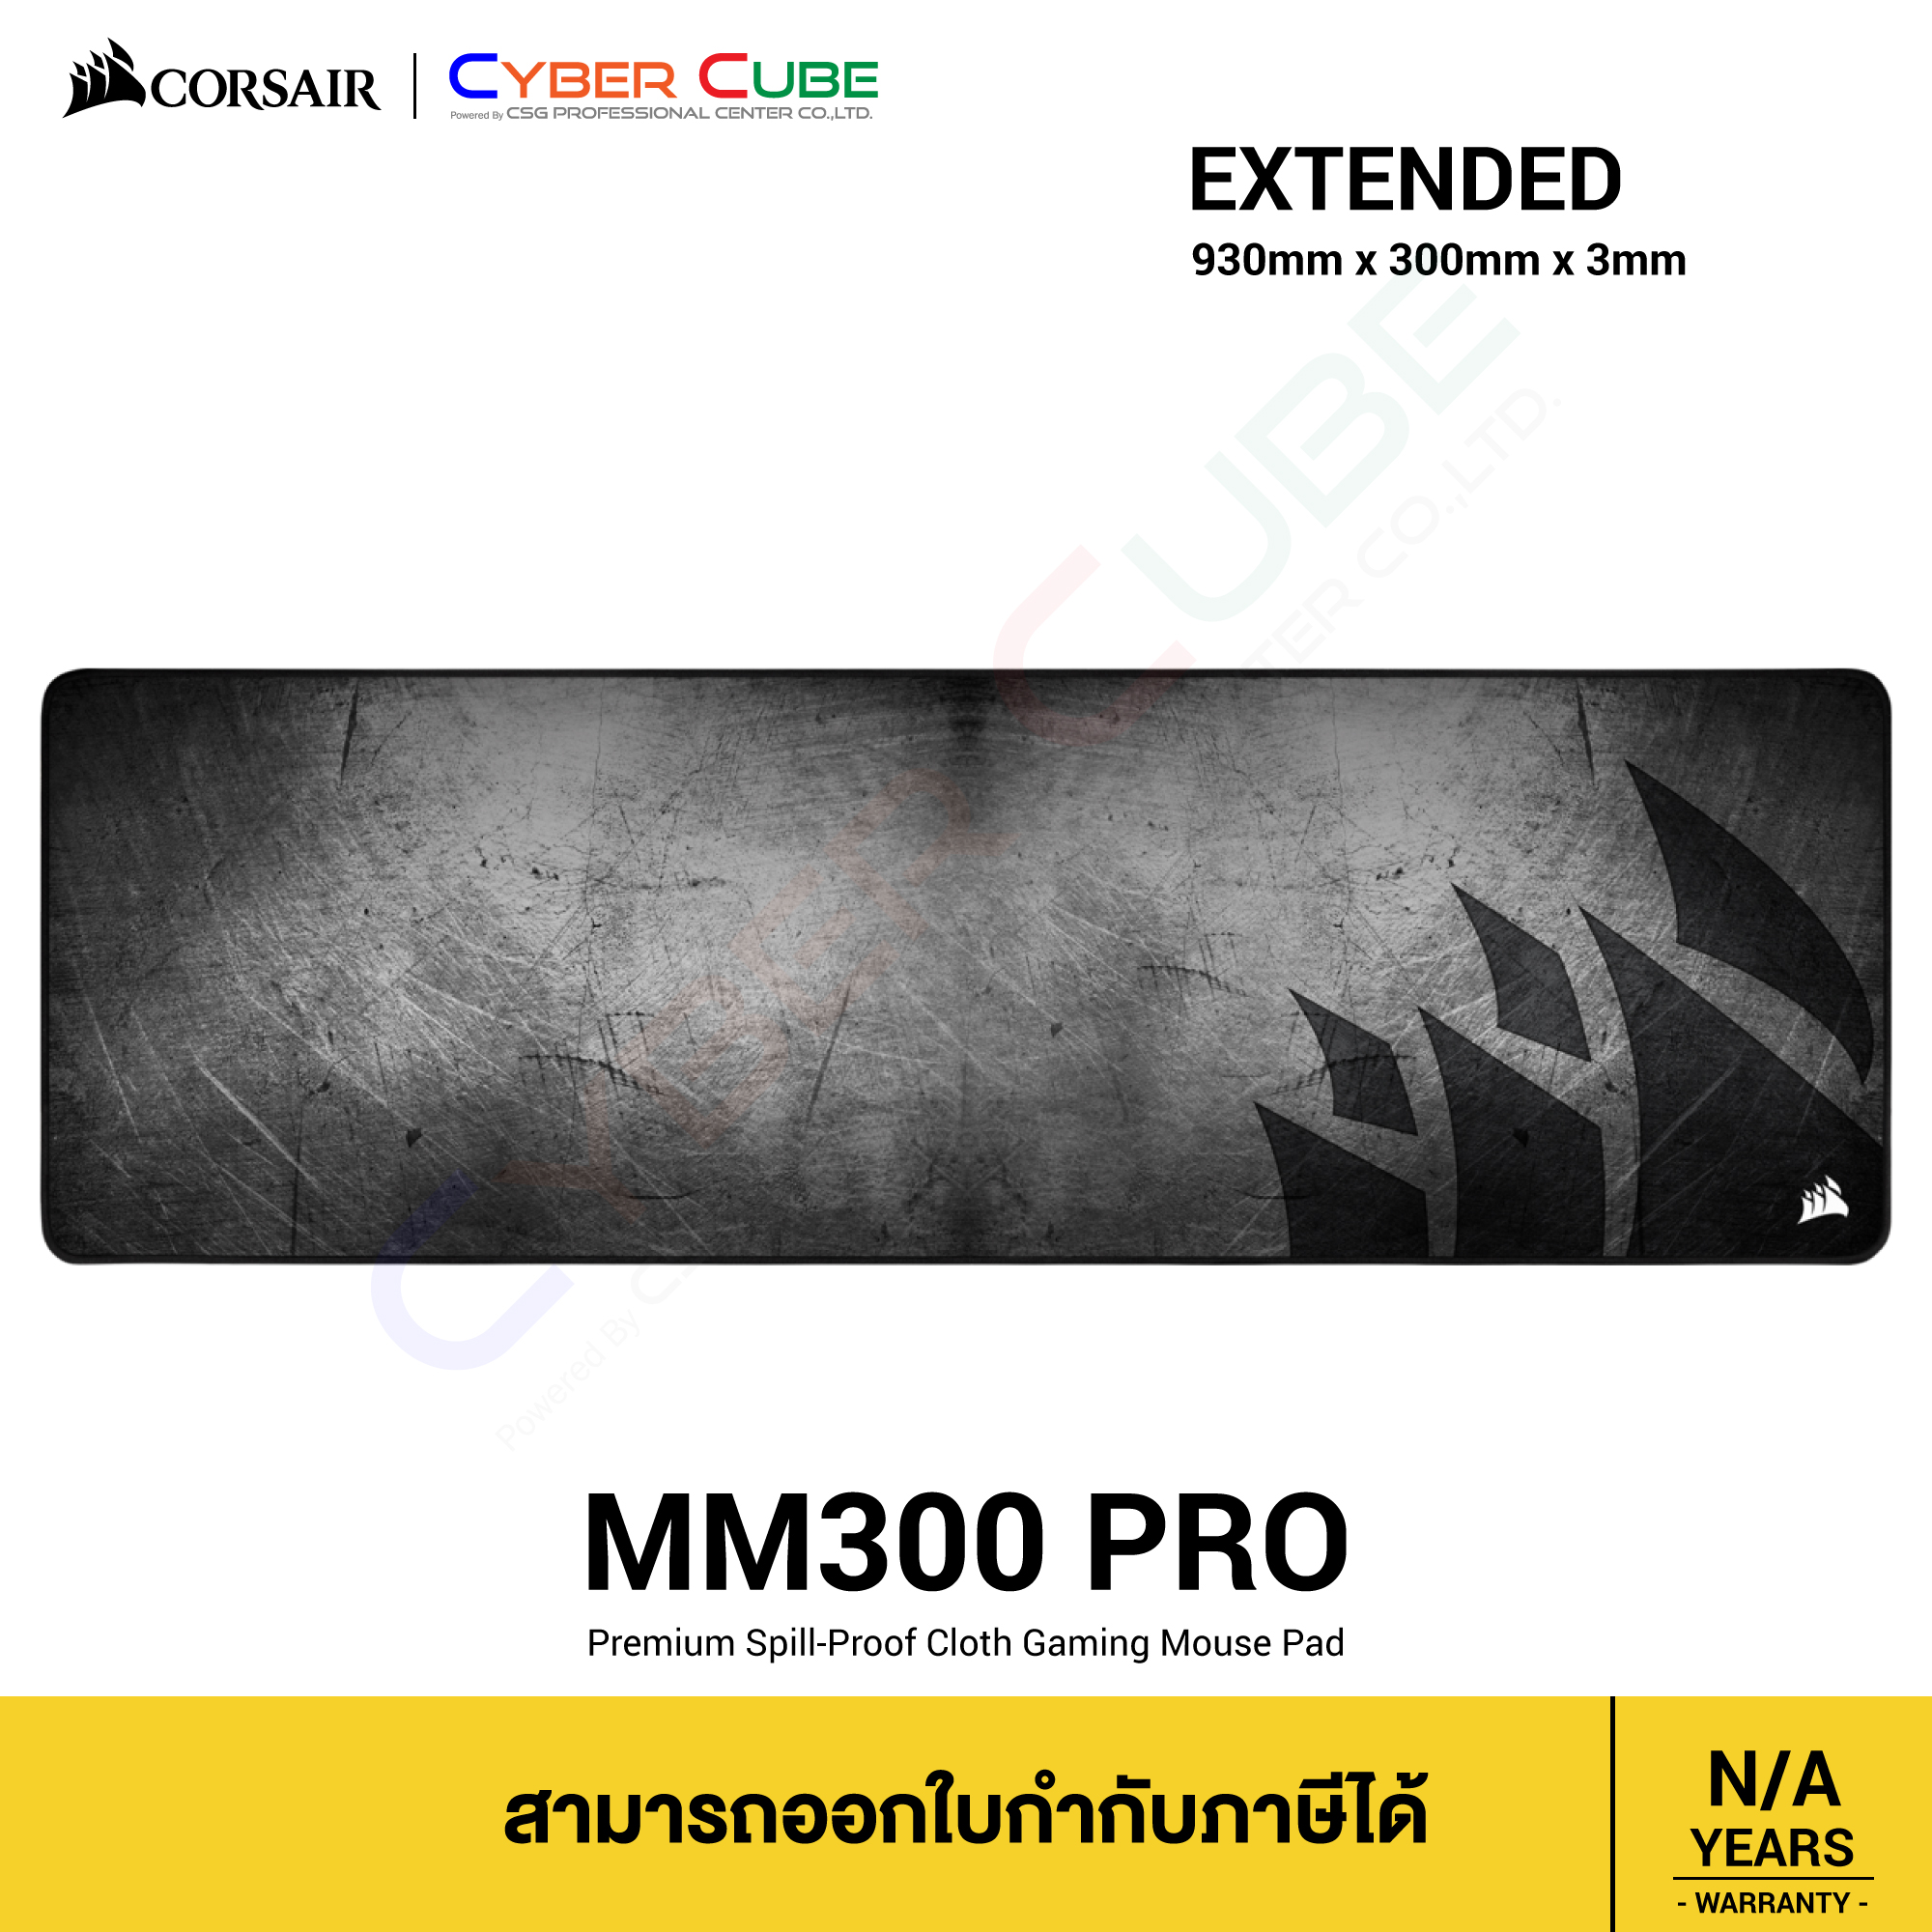 CORSAIR MM300 PRO Premium Spill-Proof Cloth Gaming Mouse Pad - Extended แผ่นรองเมาส์ (เม้าส์แพด) ( ของแท้ศูนย์ Ascenti )